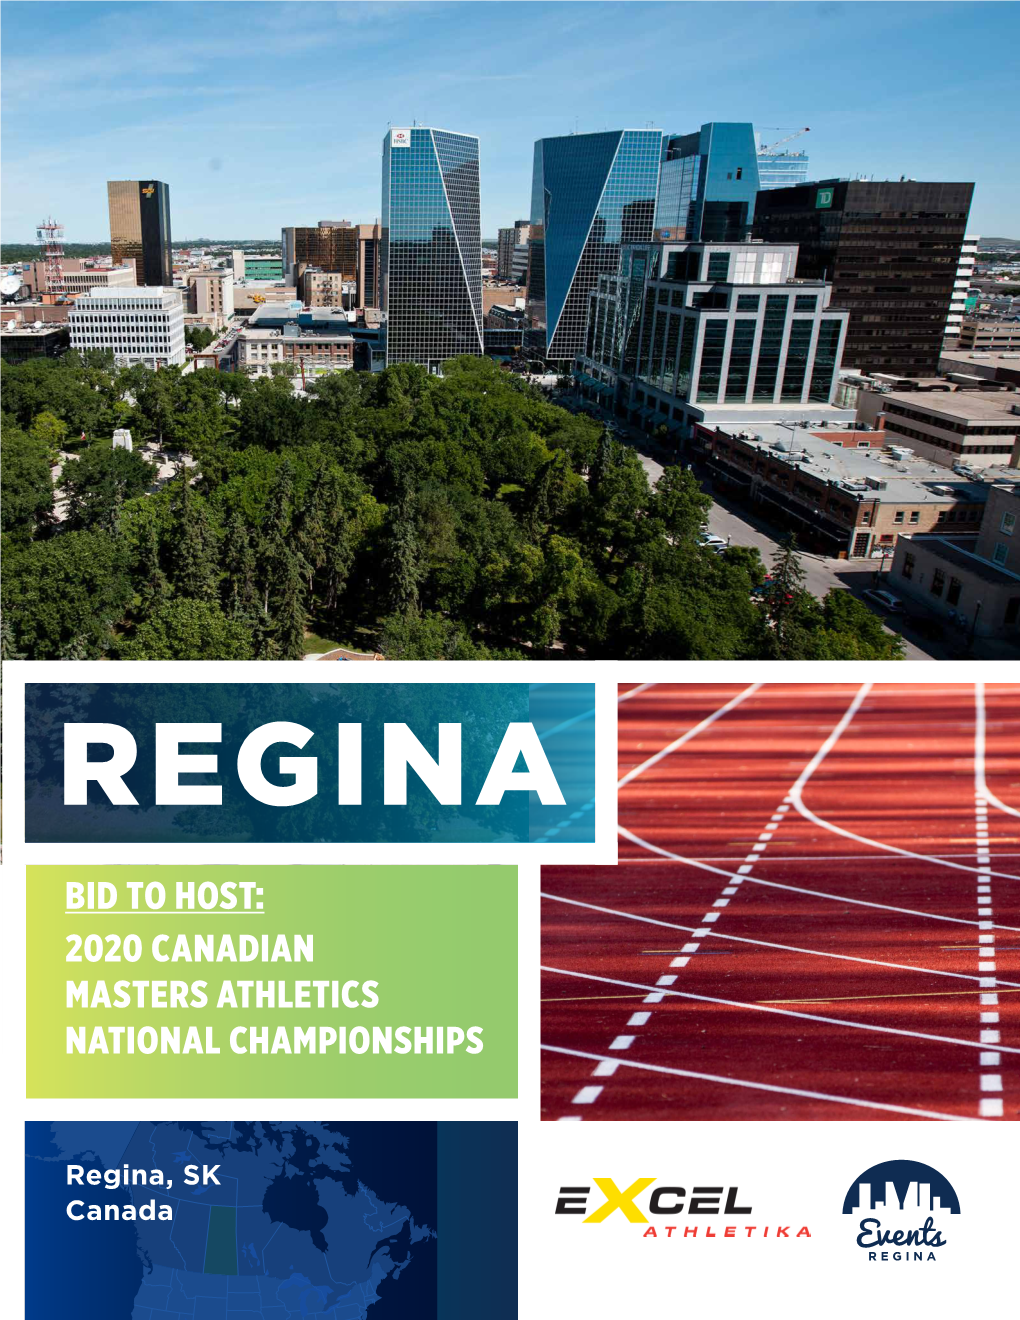 Bid to Host: 2020 Canadian Masters Athletics National Championships